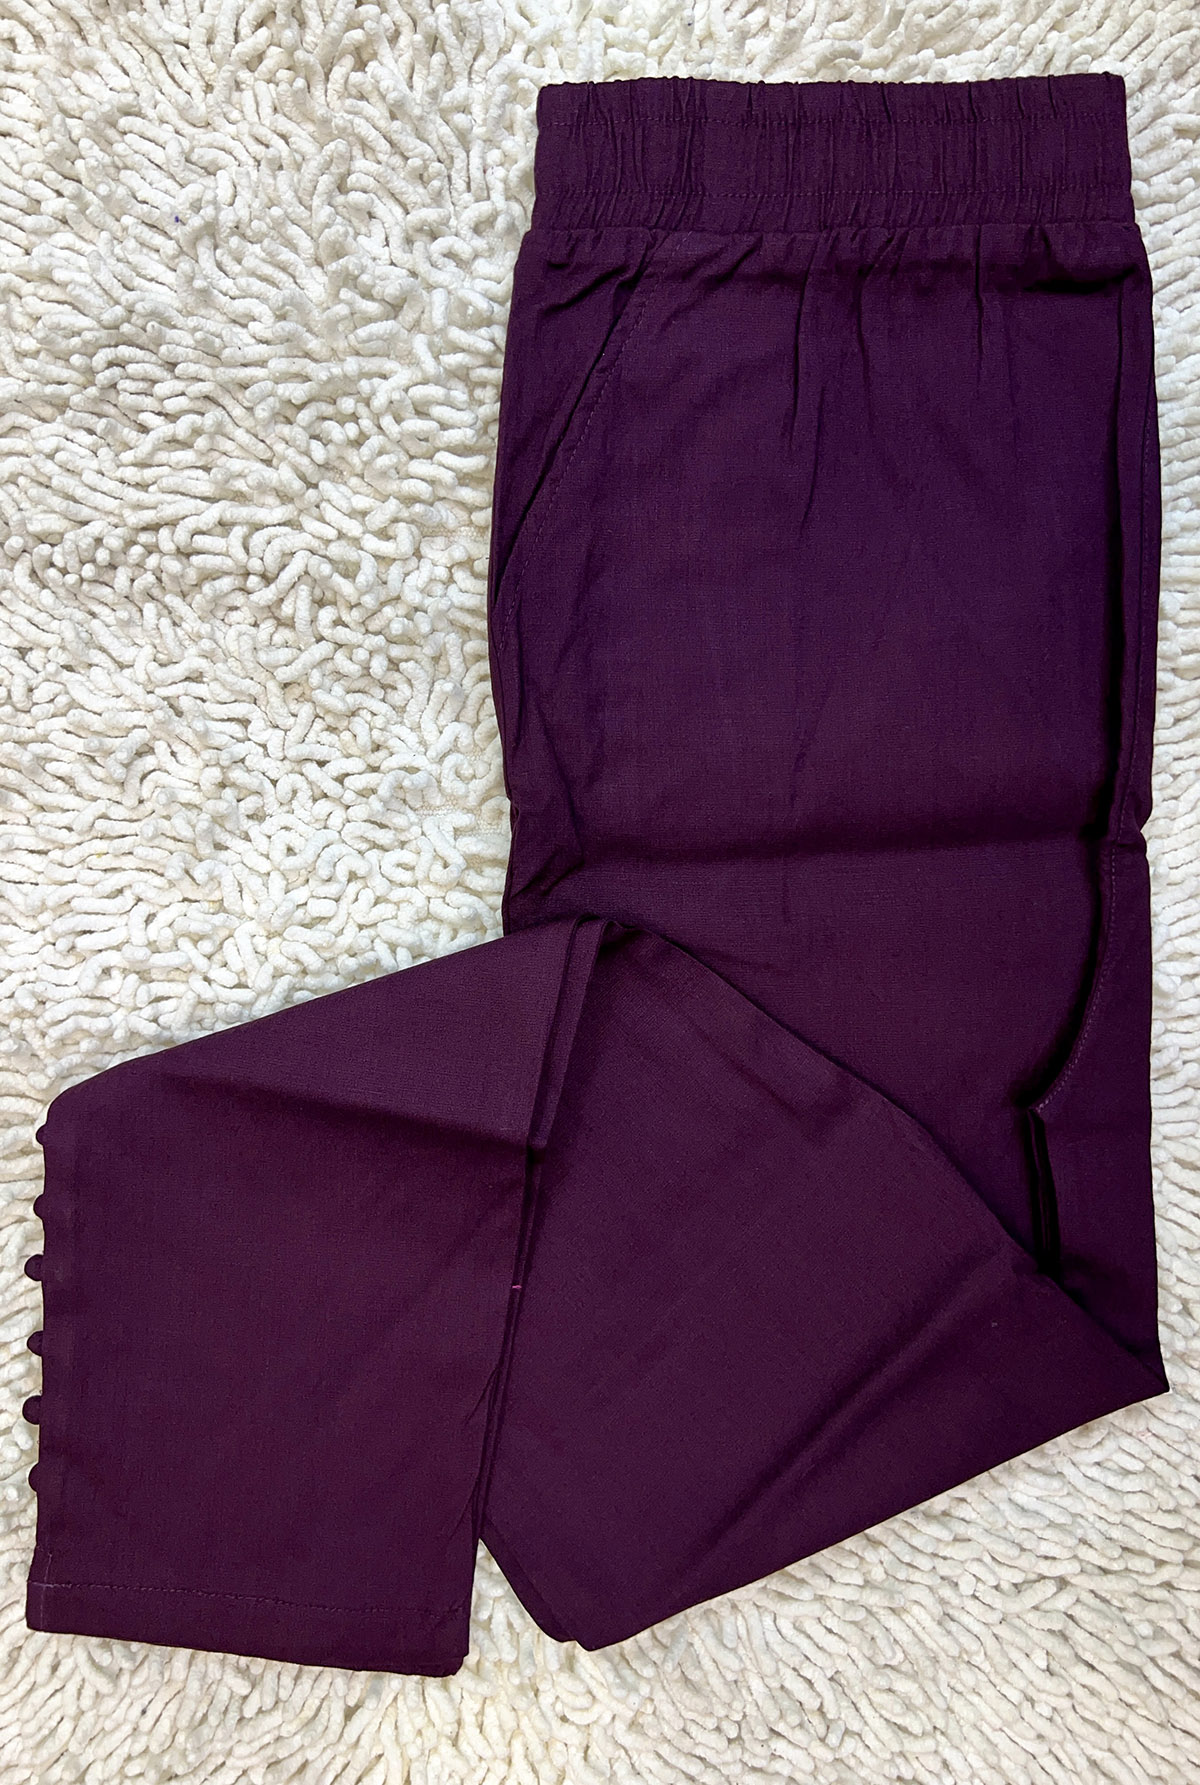 Dark Purple Lounge Pants with pockets – Jami Ray Vintage